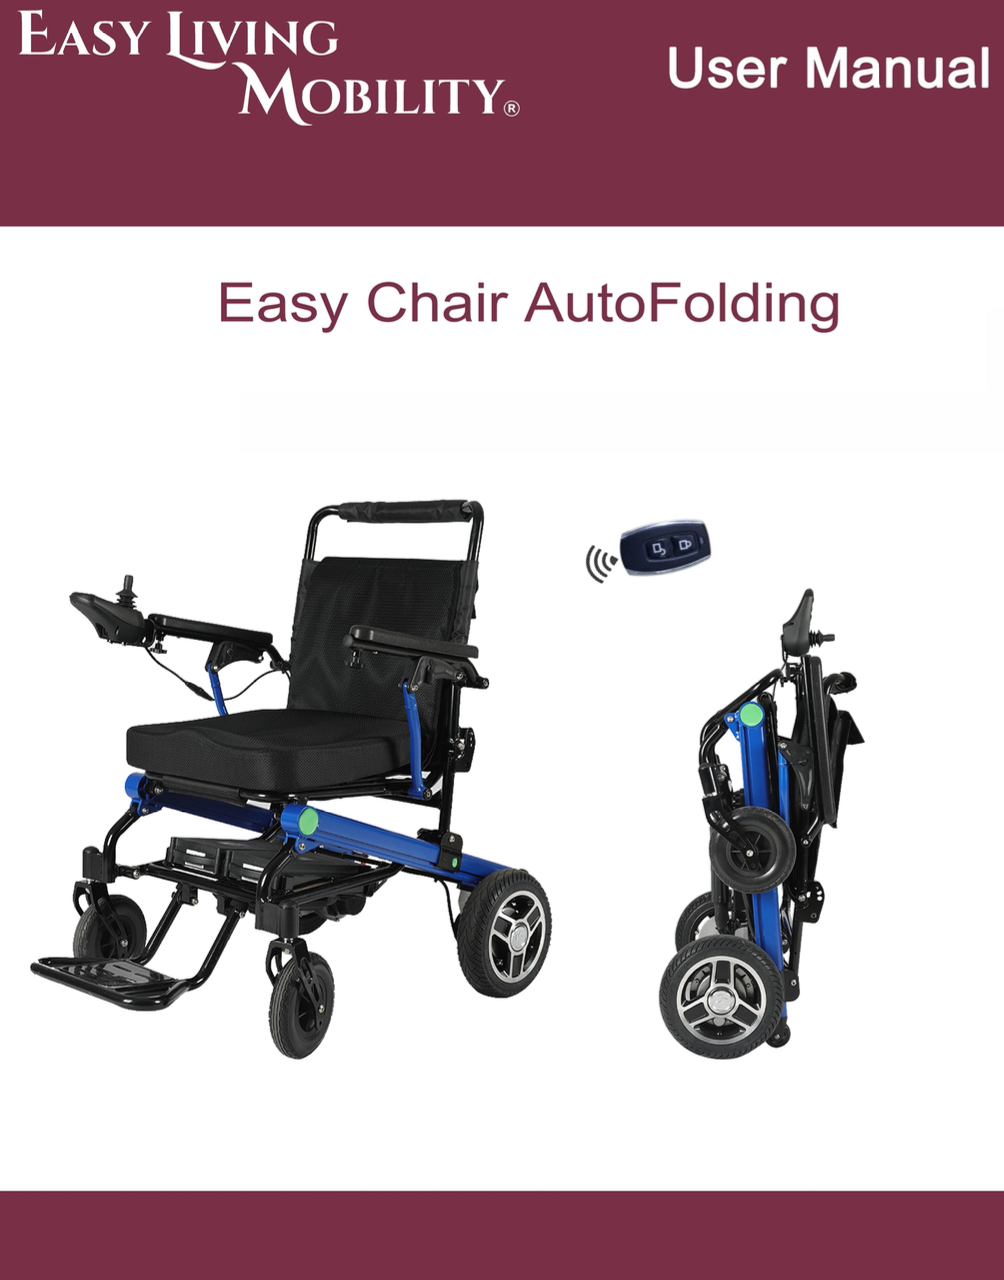 Easy Chair AutoFolding